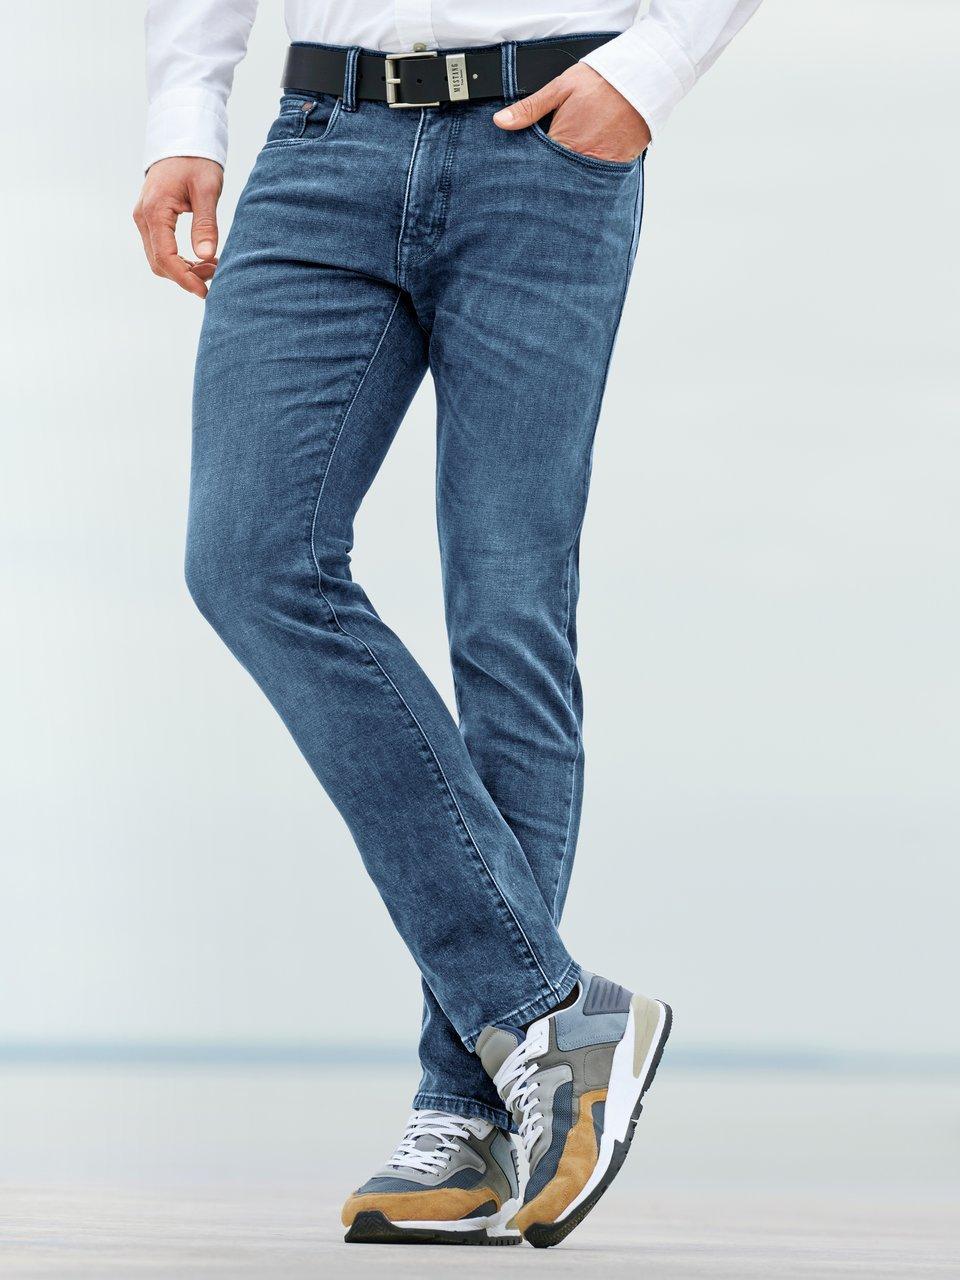 Pierre Cardin - Jeans Modell Antibes